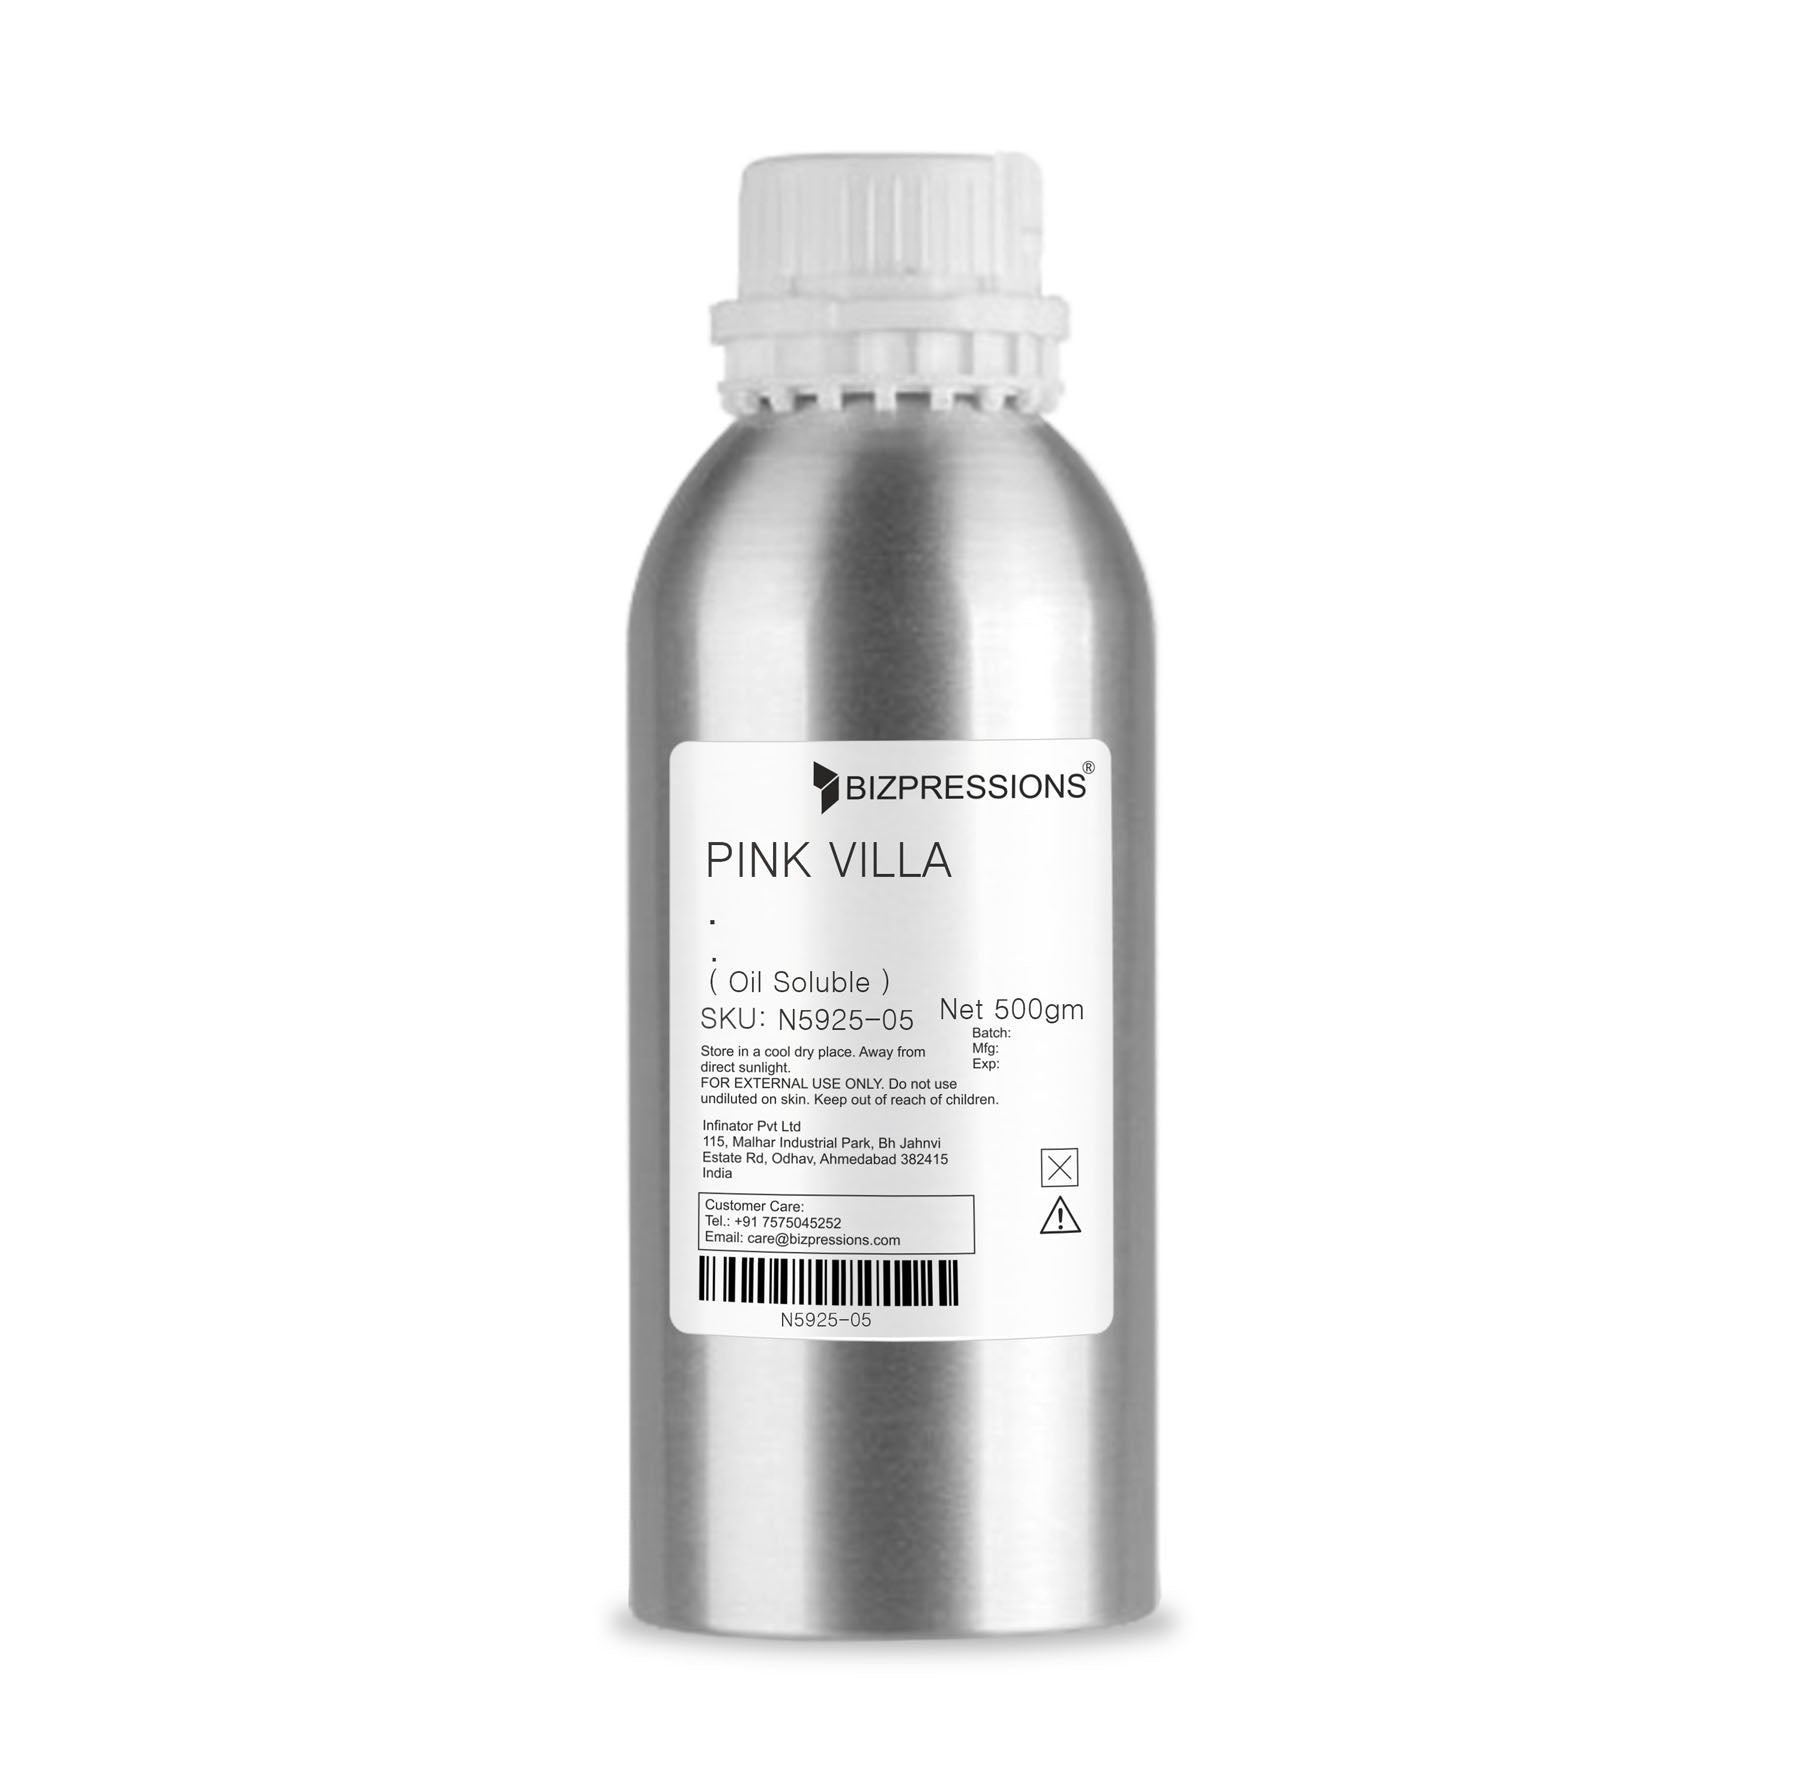 PINK VILLA - Fragrance ( Oil Soluble ) - 500 gm